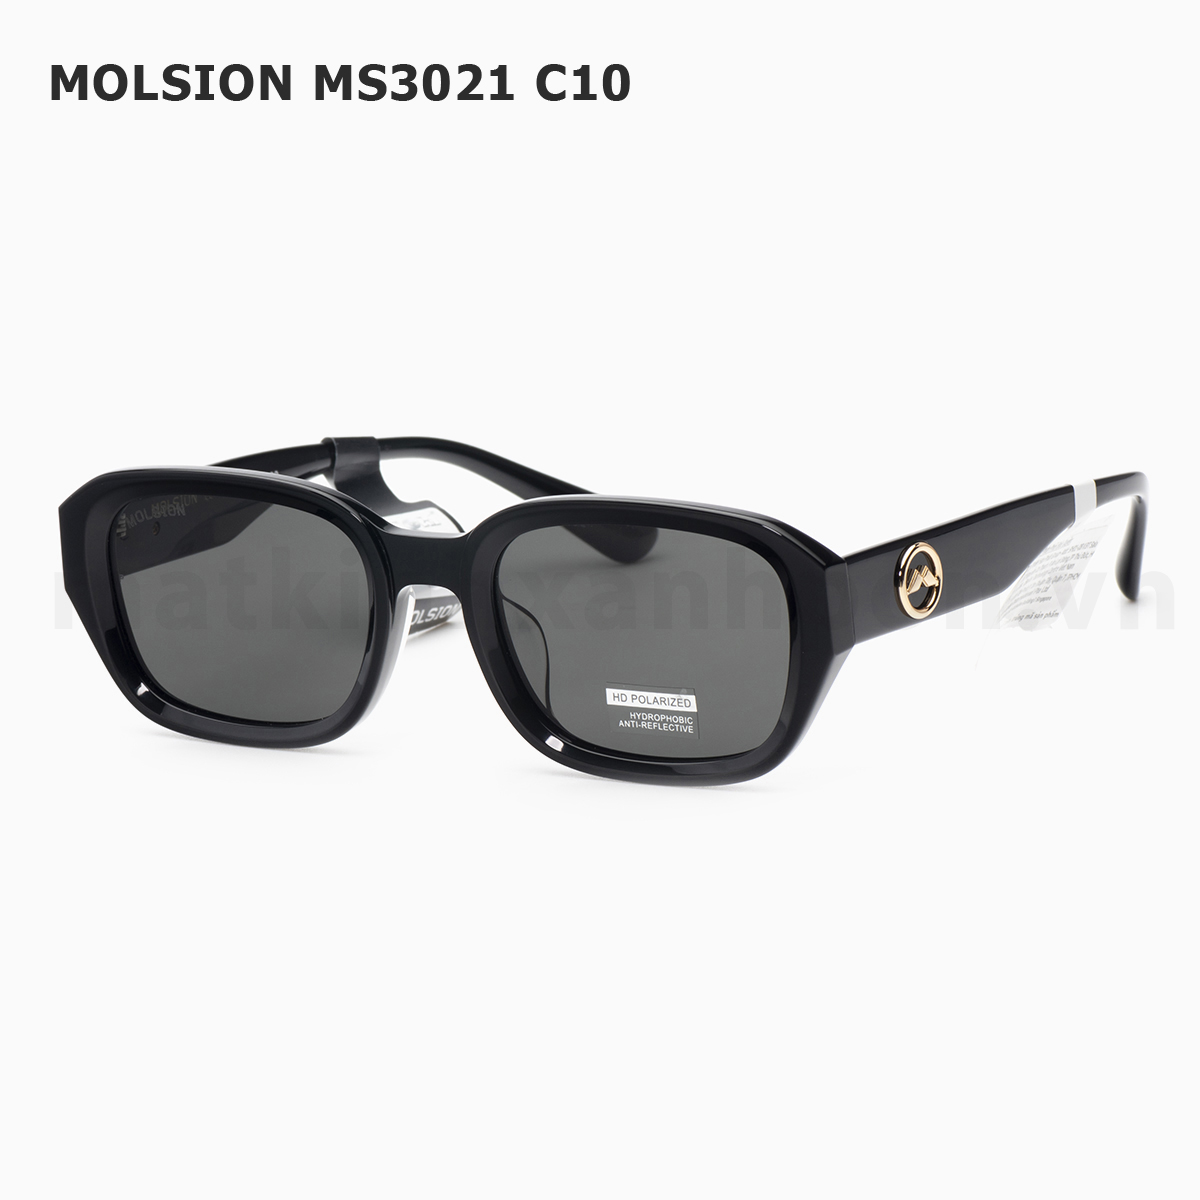 Molsion MS3021 C10